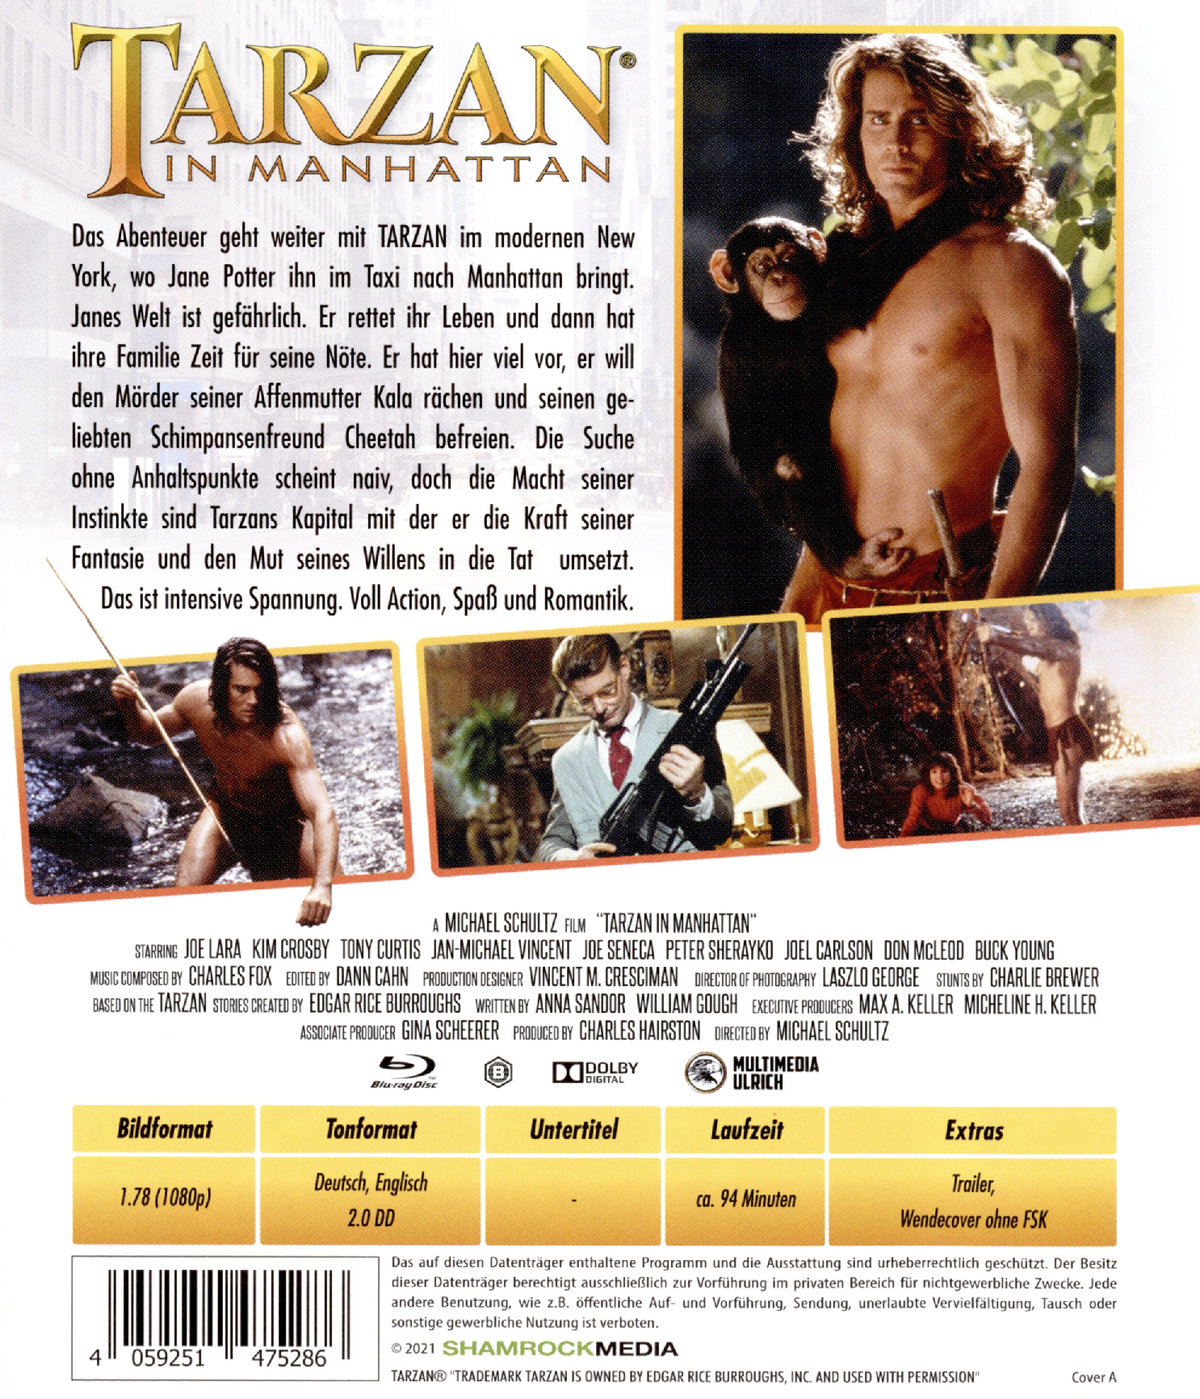 Tarzan in Manhattan (blu-ray) (A)